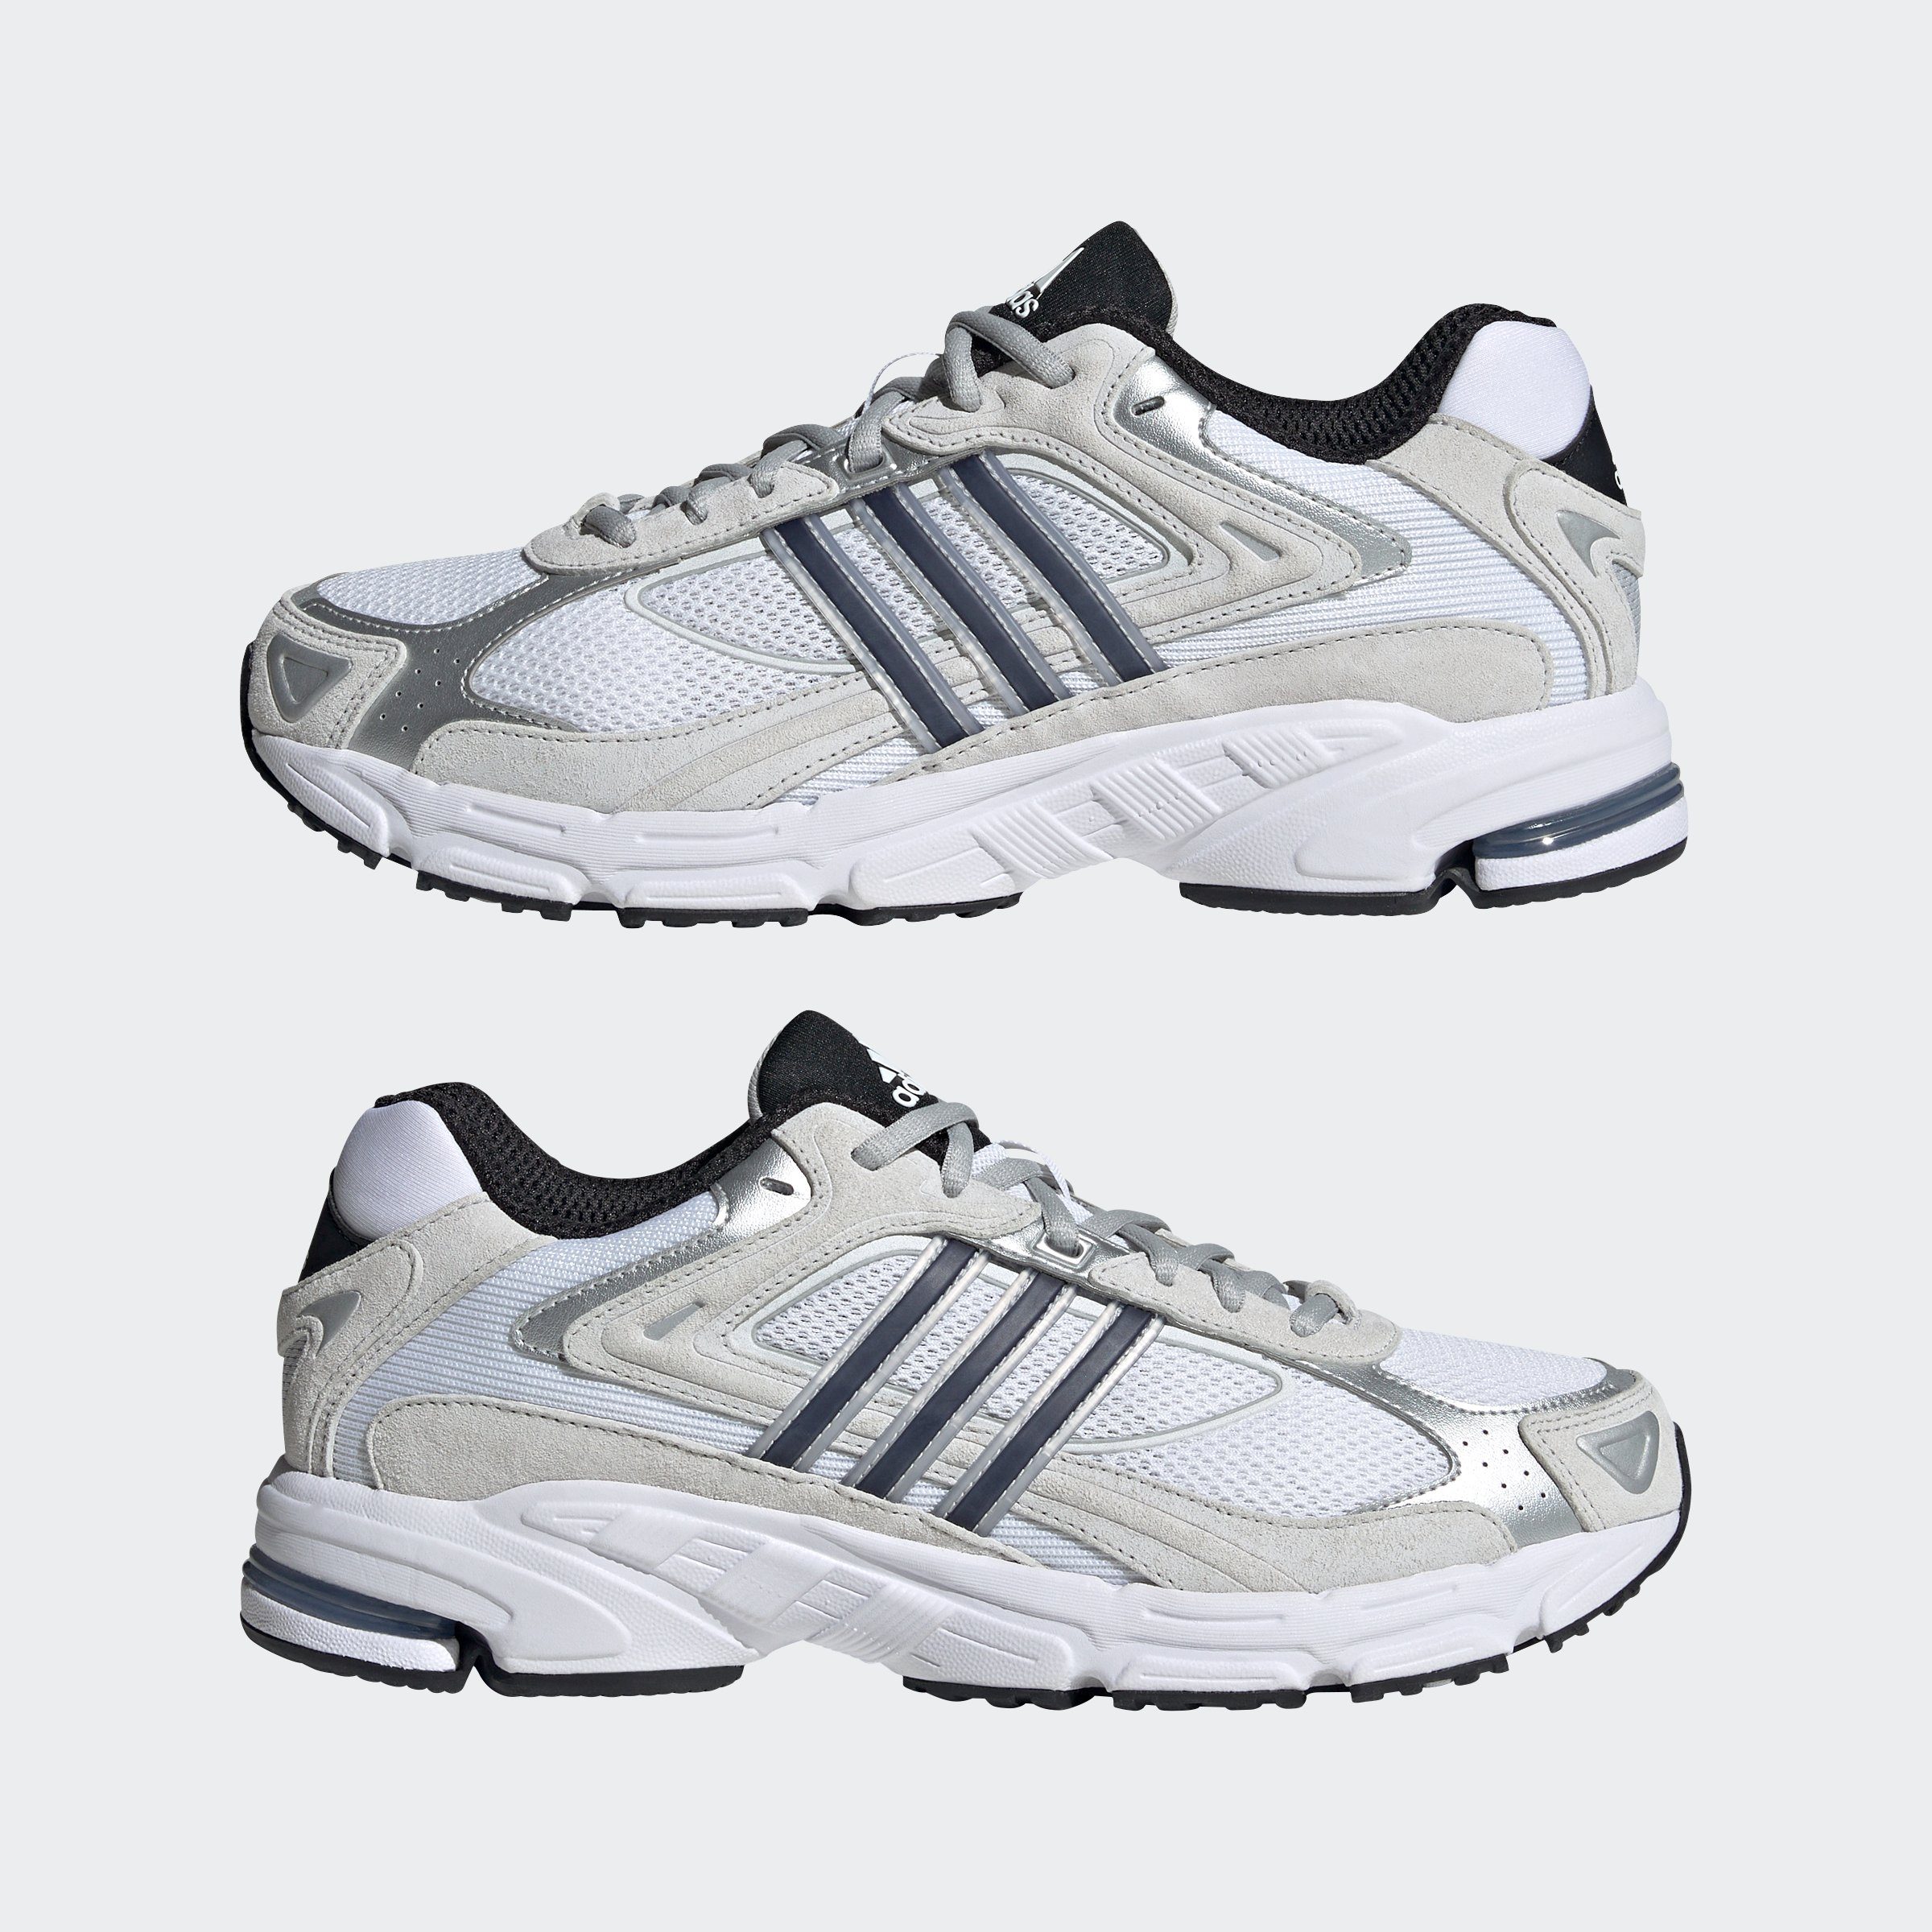 adidas Originals RESPONSE / / Black Core White CL Sneaker Grey Two Cloud